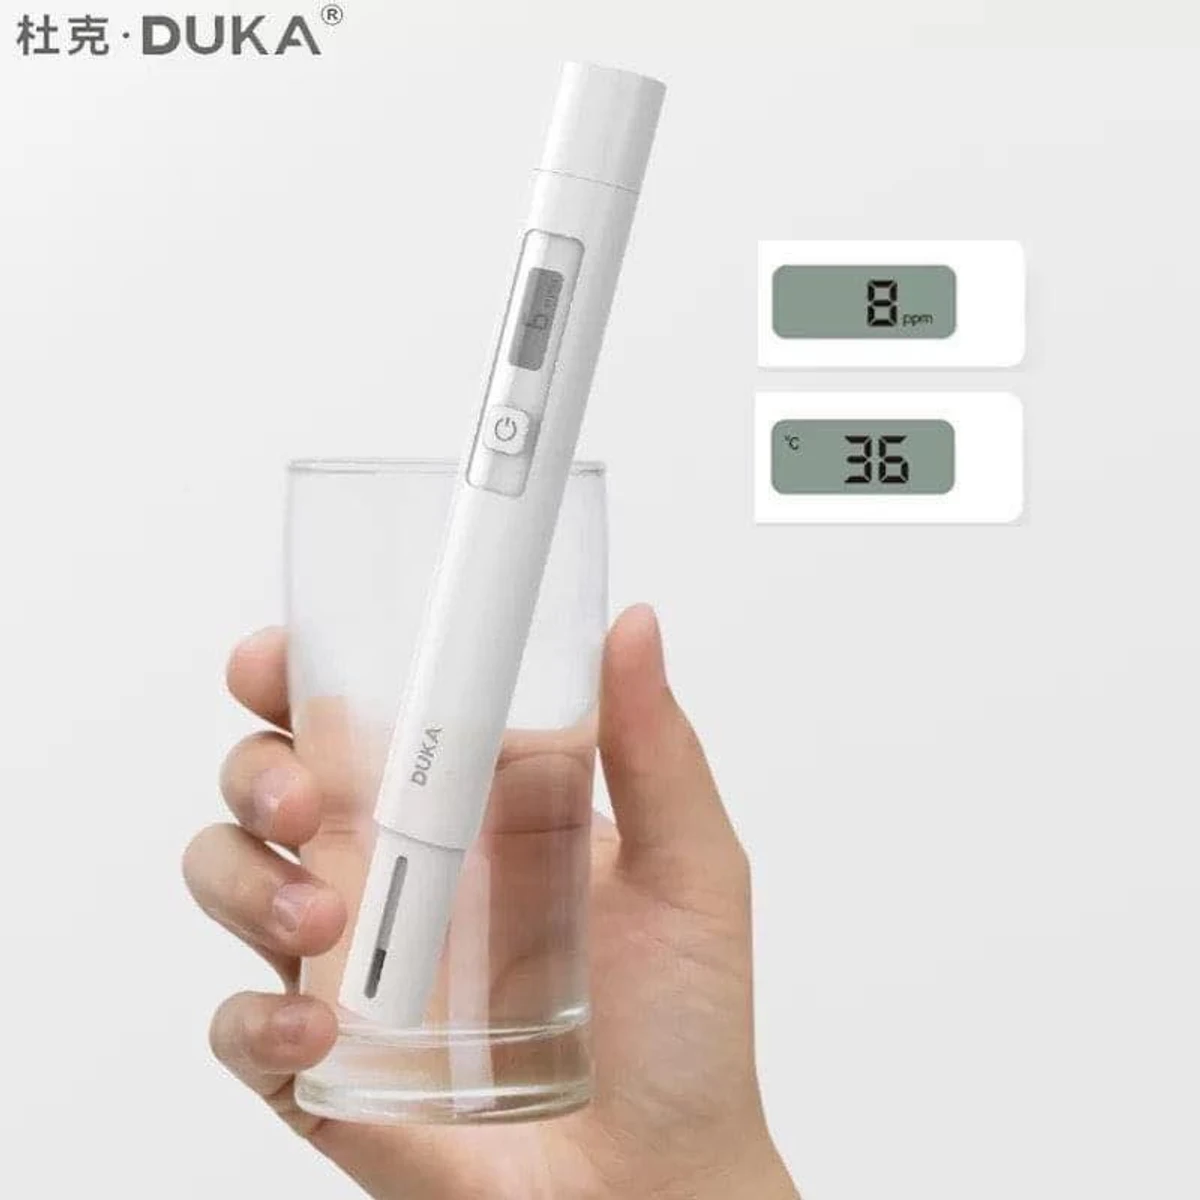 Xiaomi atuman duka water purification testing meter